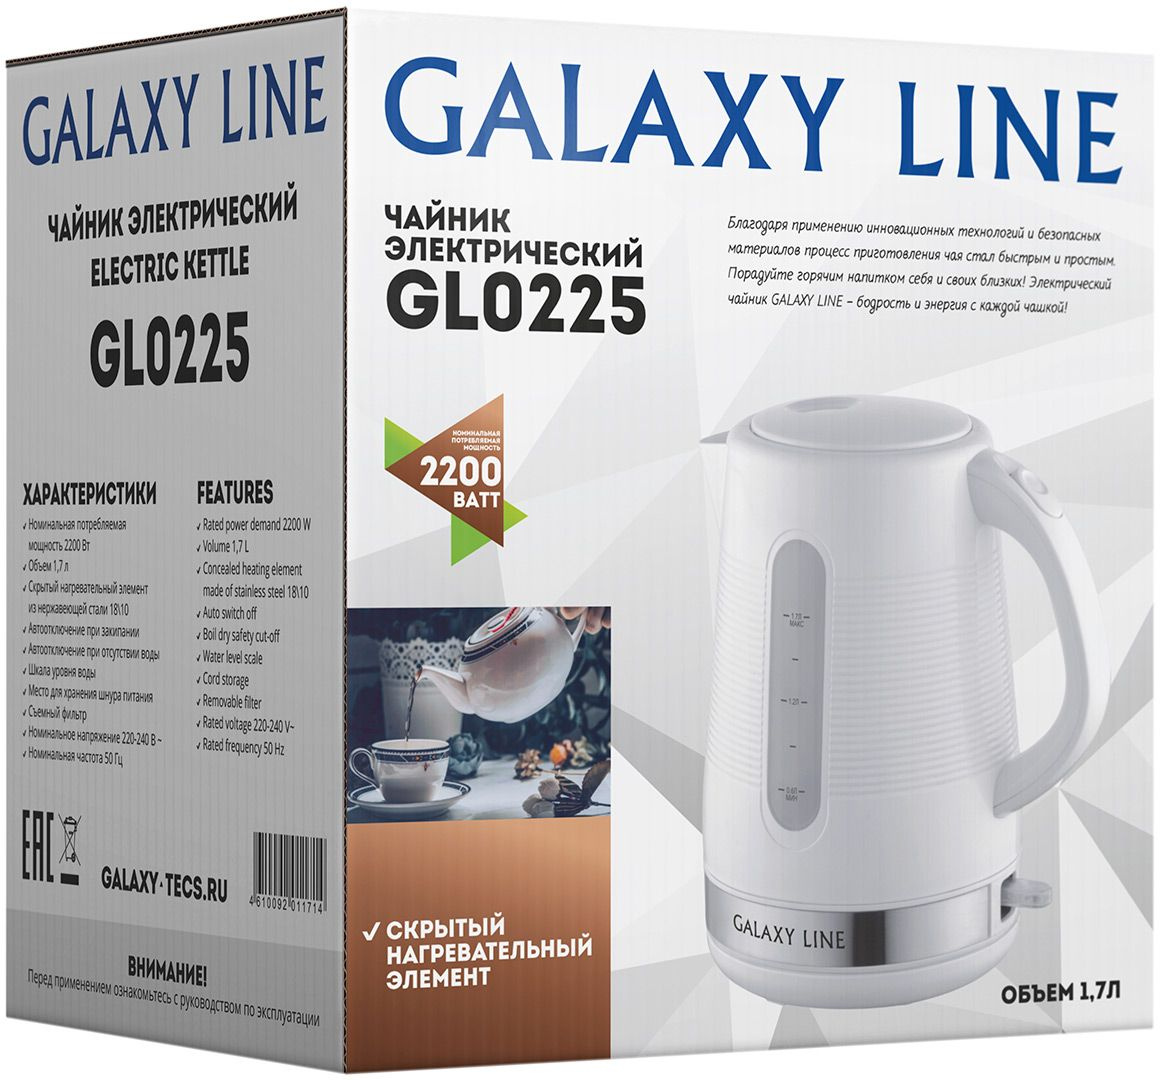 Чайник Galaxy Line GL 0225 